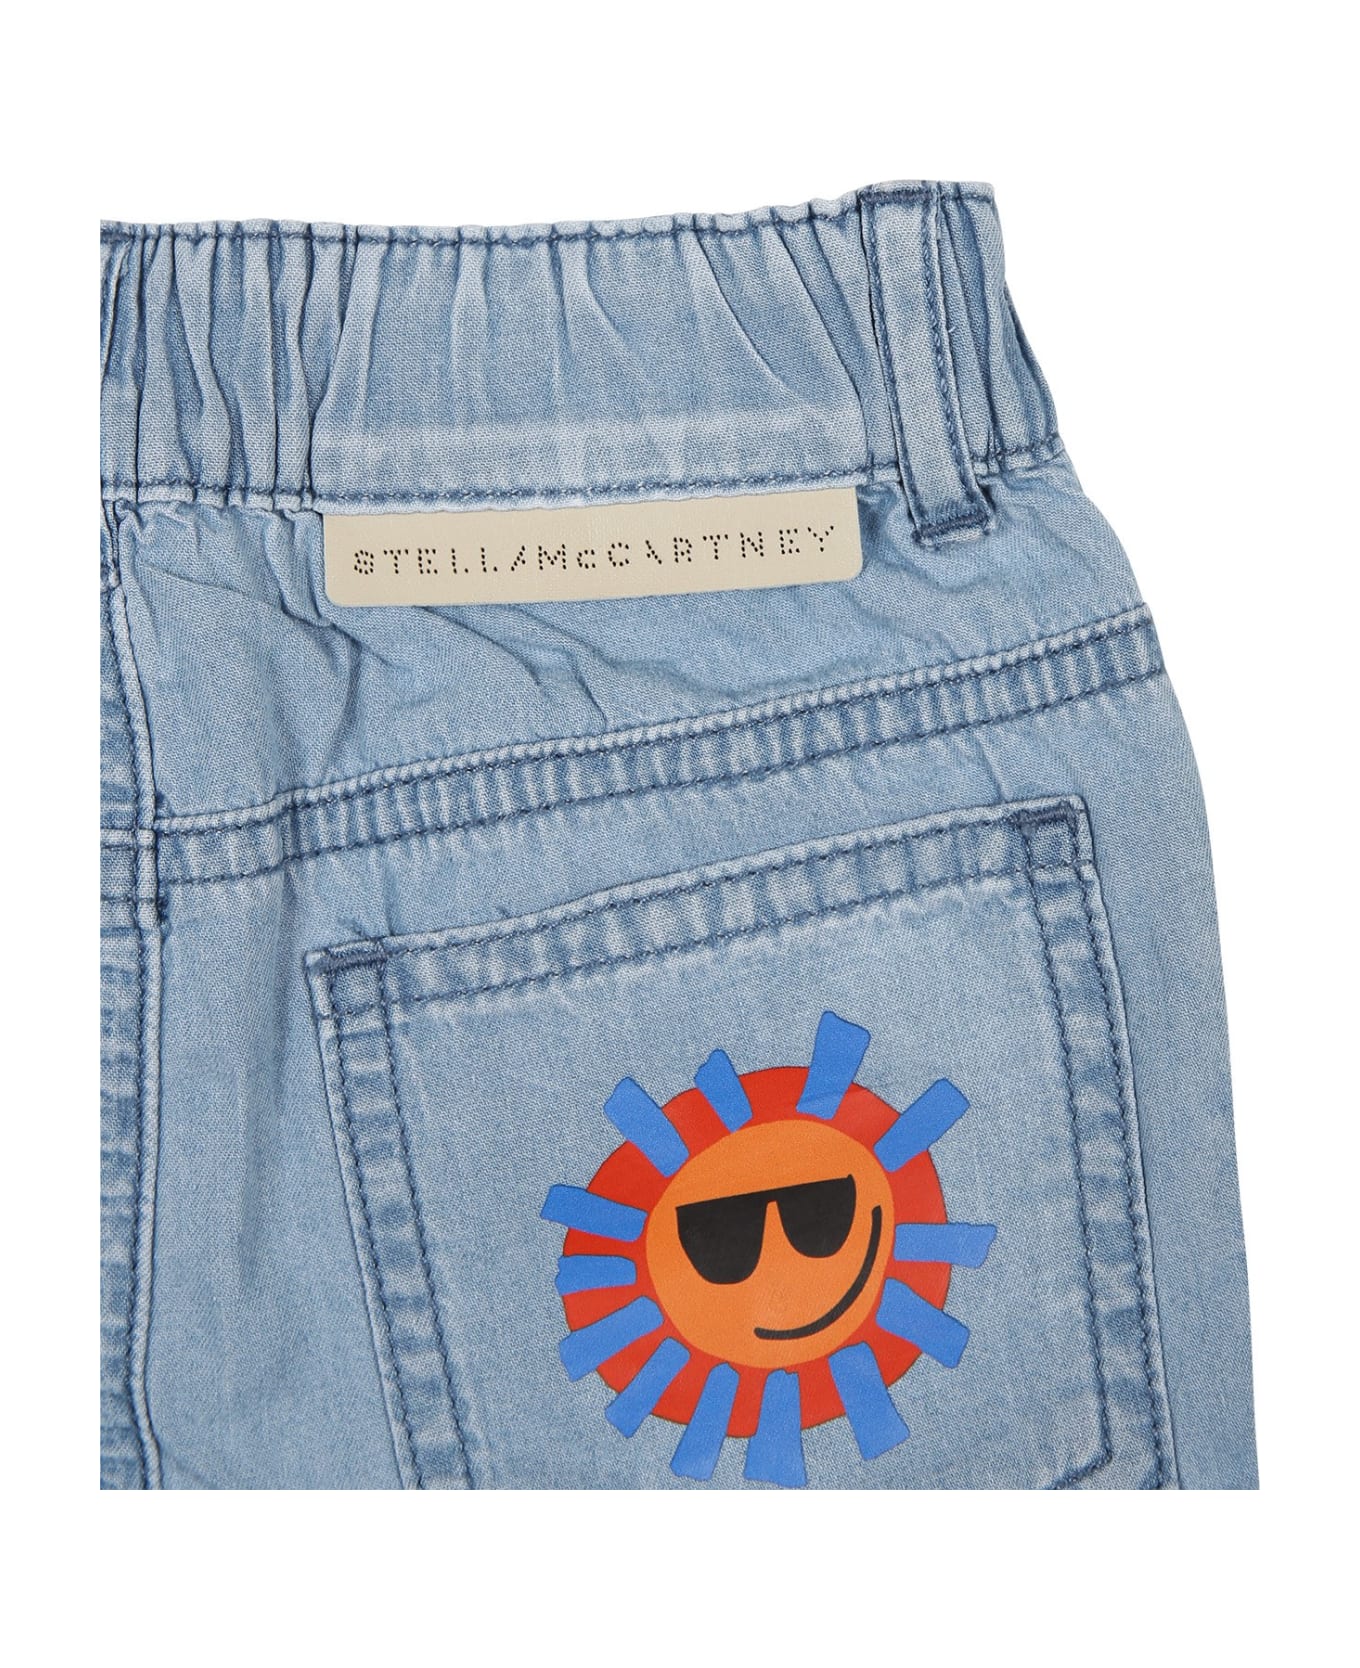 Stella McCartney Kids Denim Shorts For Baby Boy With Multicolor Sun - Denim